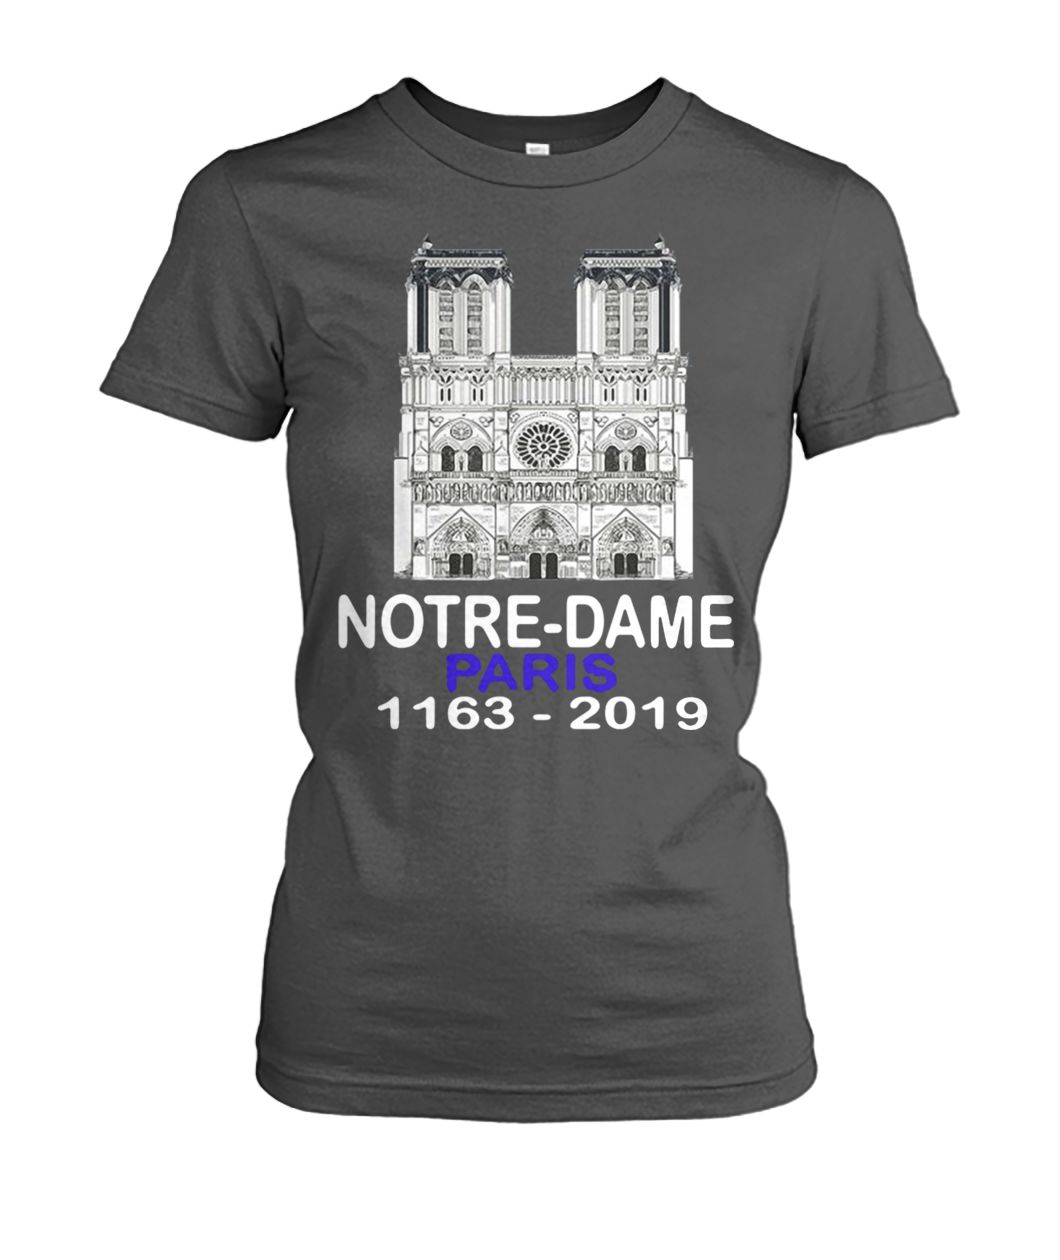 Remember notre-dame paris 1163-2019 women's crew tee